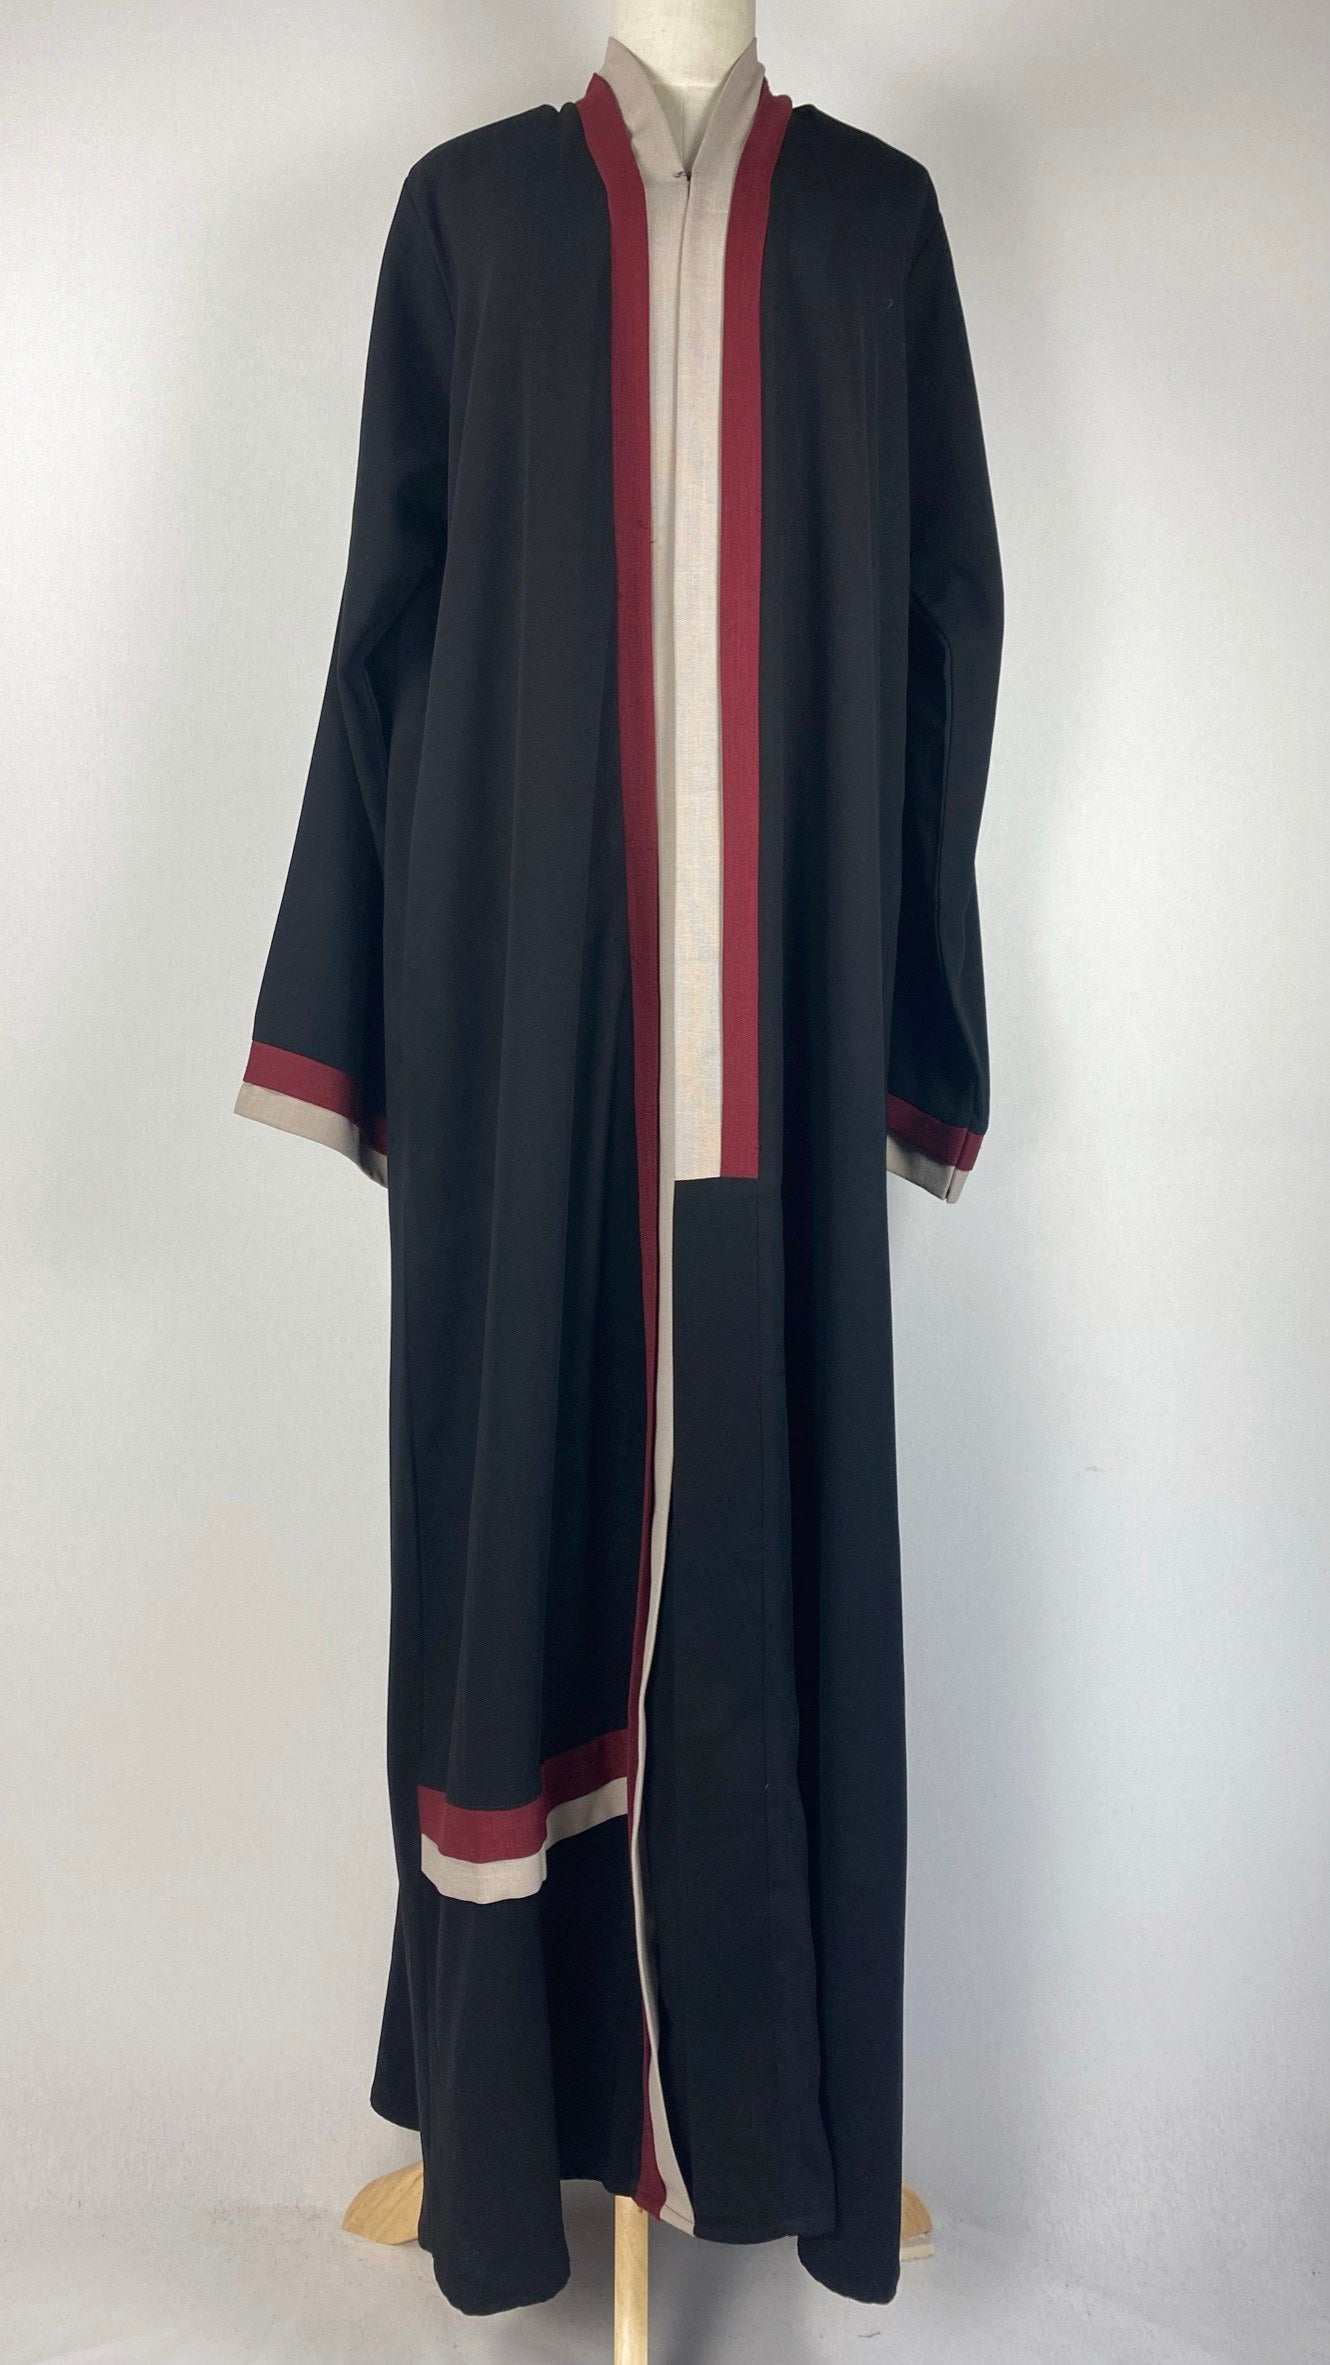 Long Sleeve Closed Abaya, Black